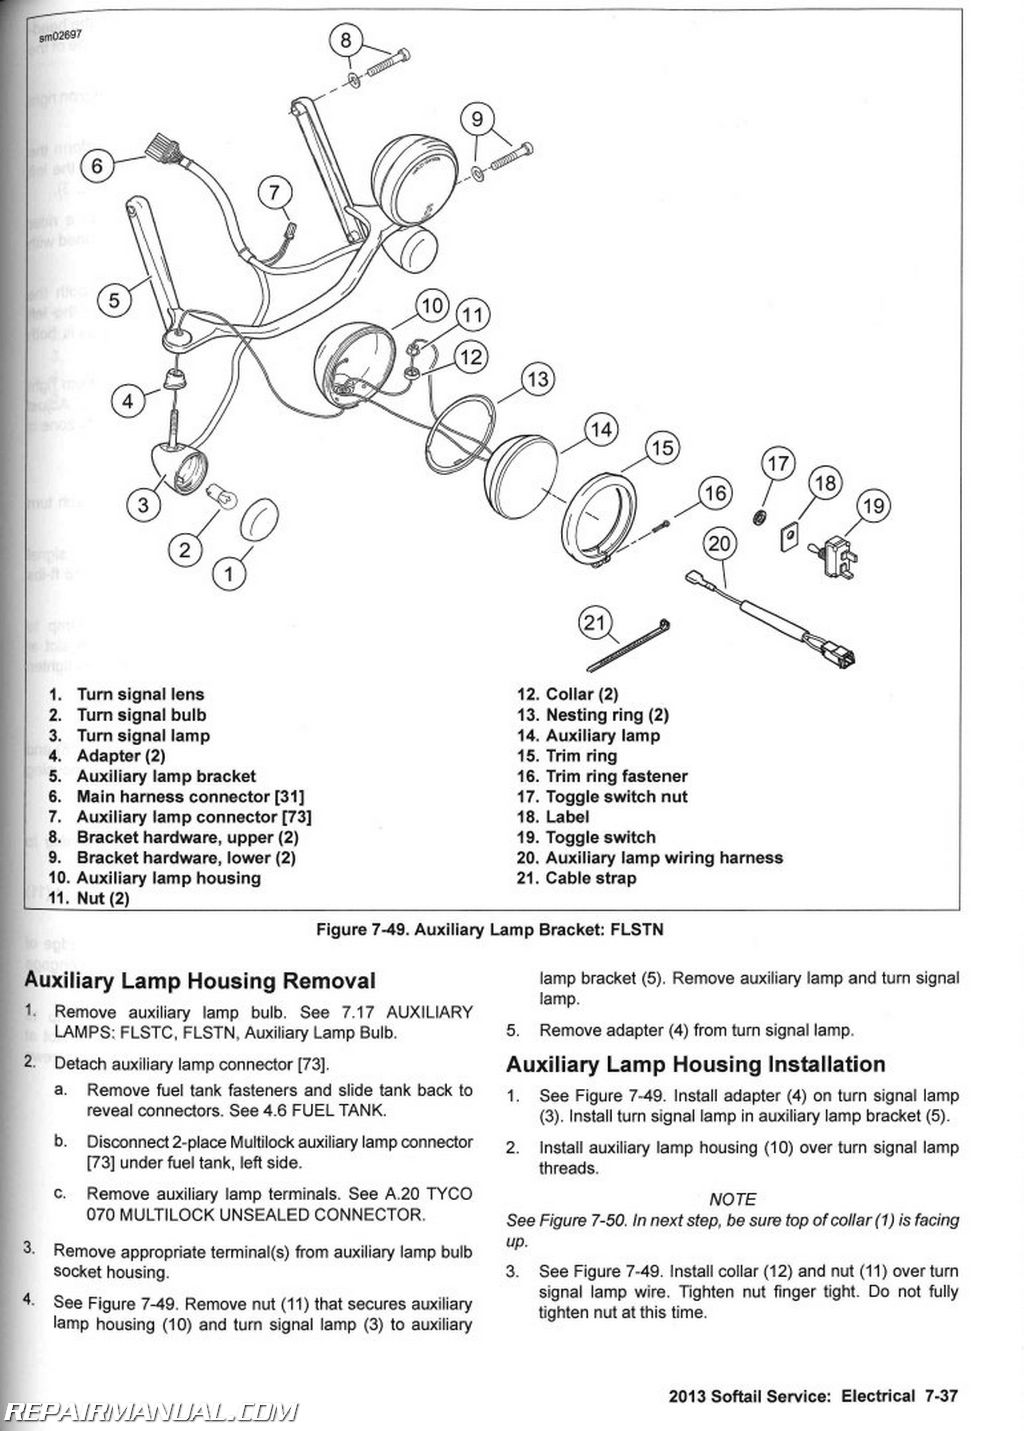 harley davidson parts manual pdf